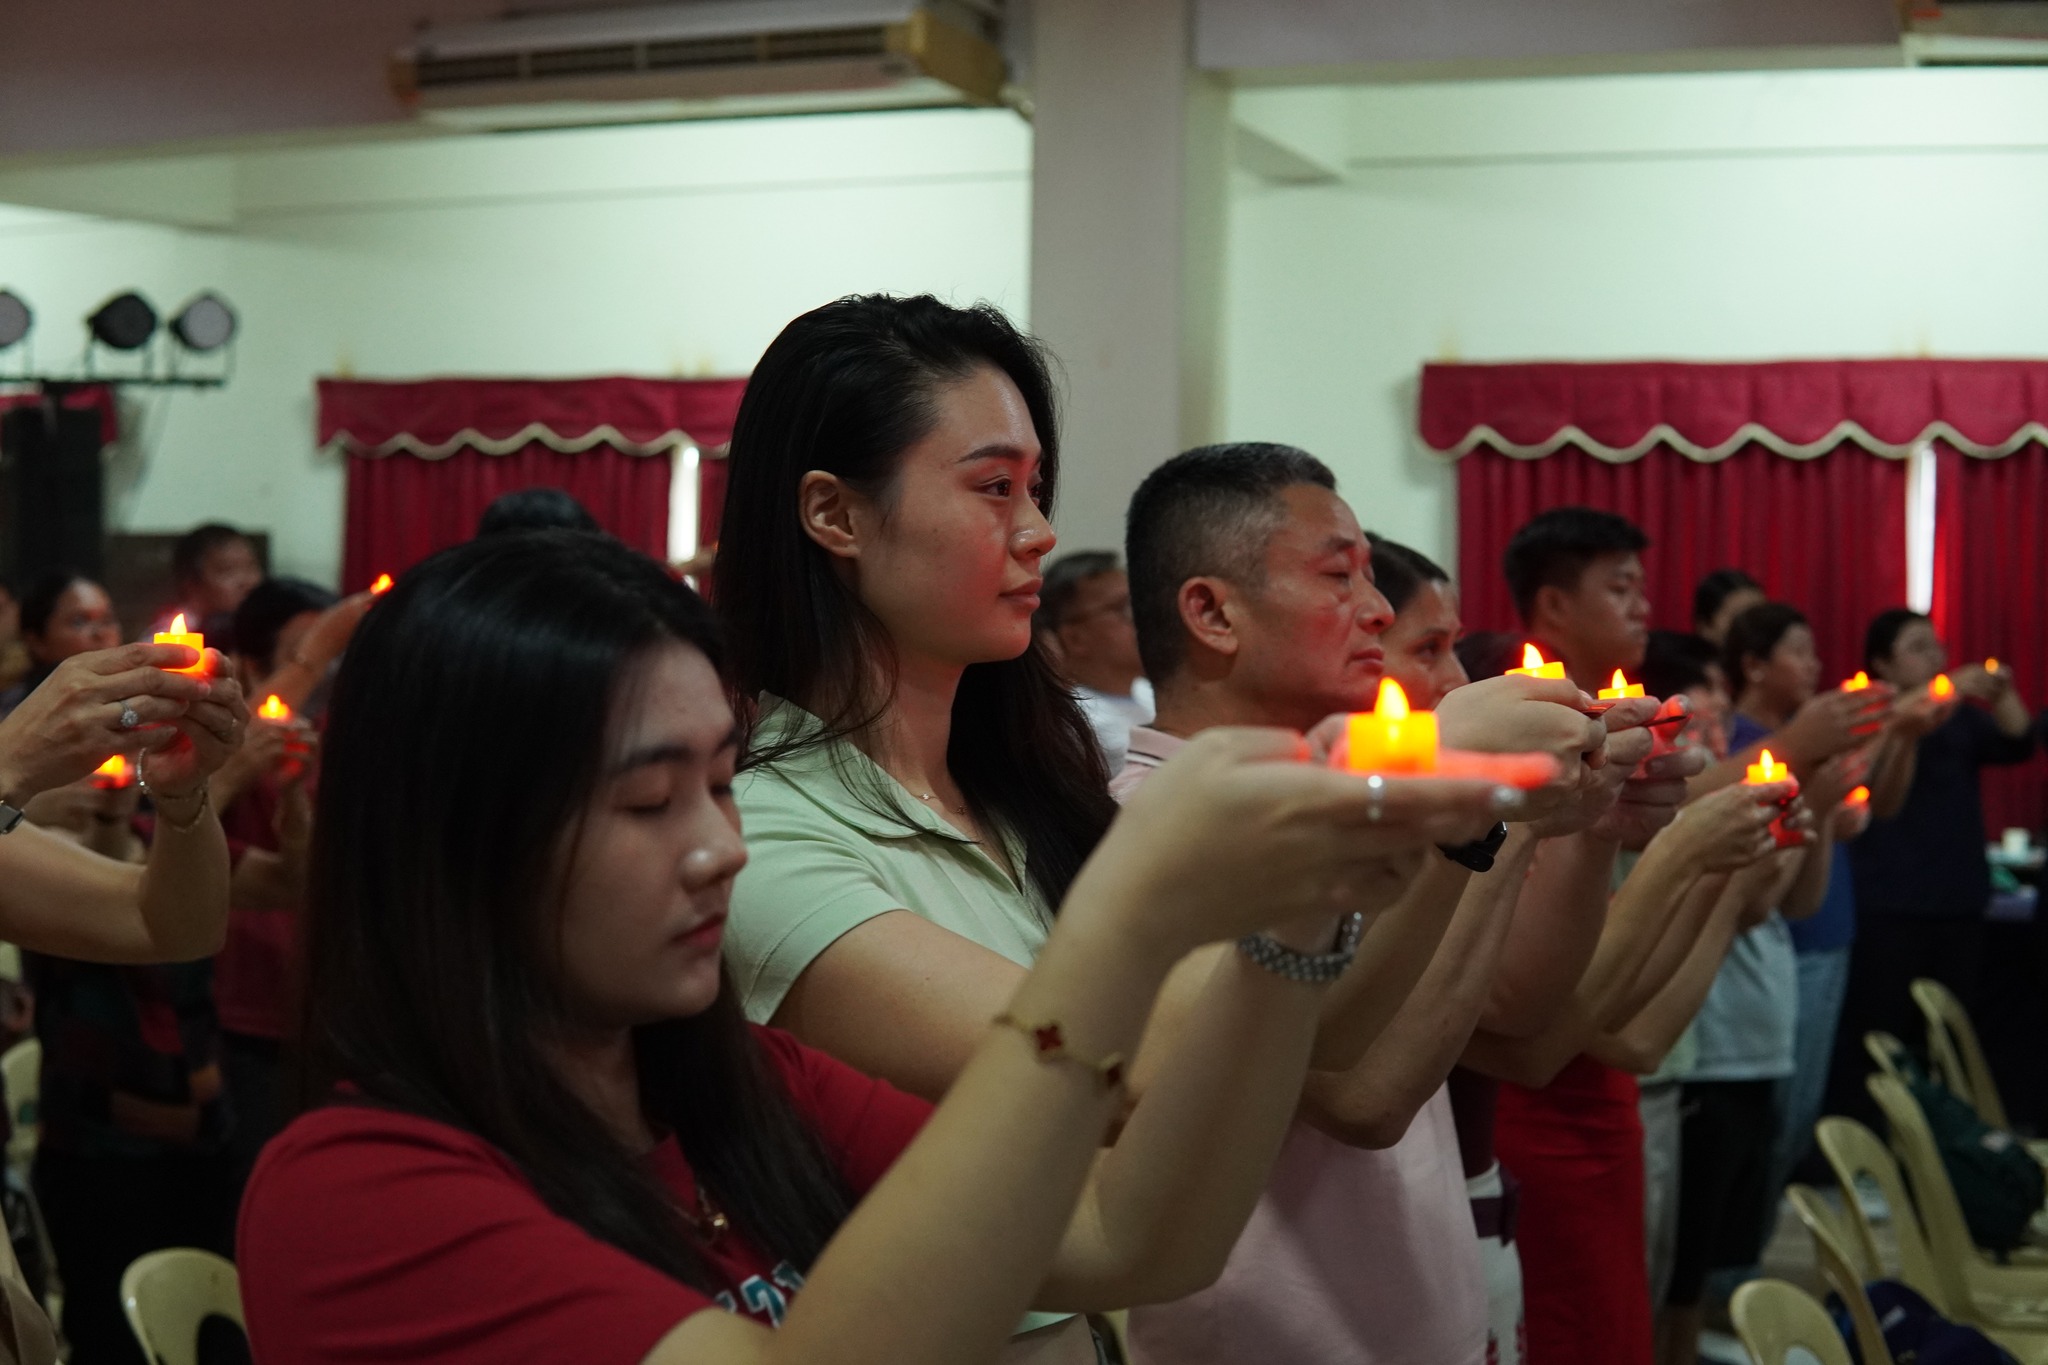 Candles symbolizes divine light guiding us through life’s journey.【Photo by Tzu Chi Davao】